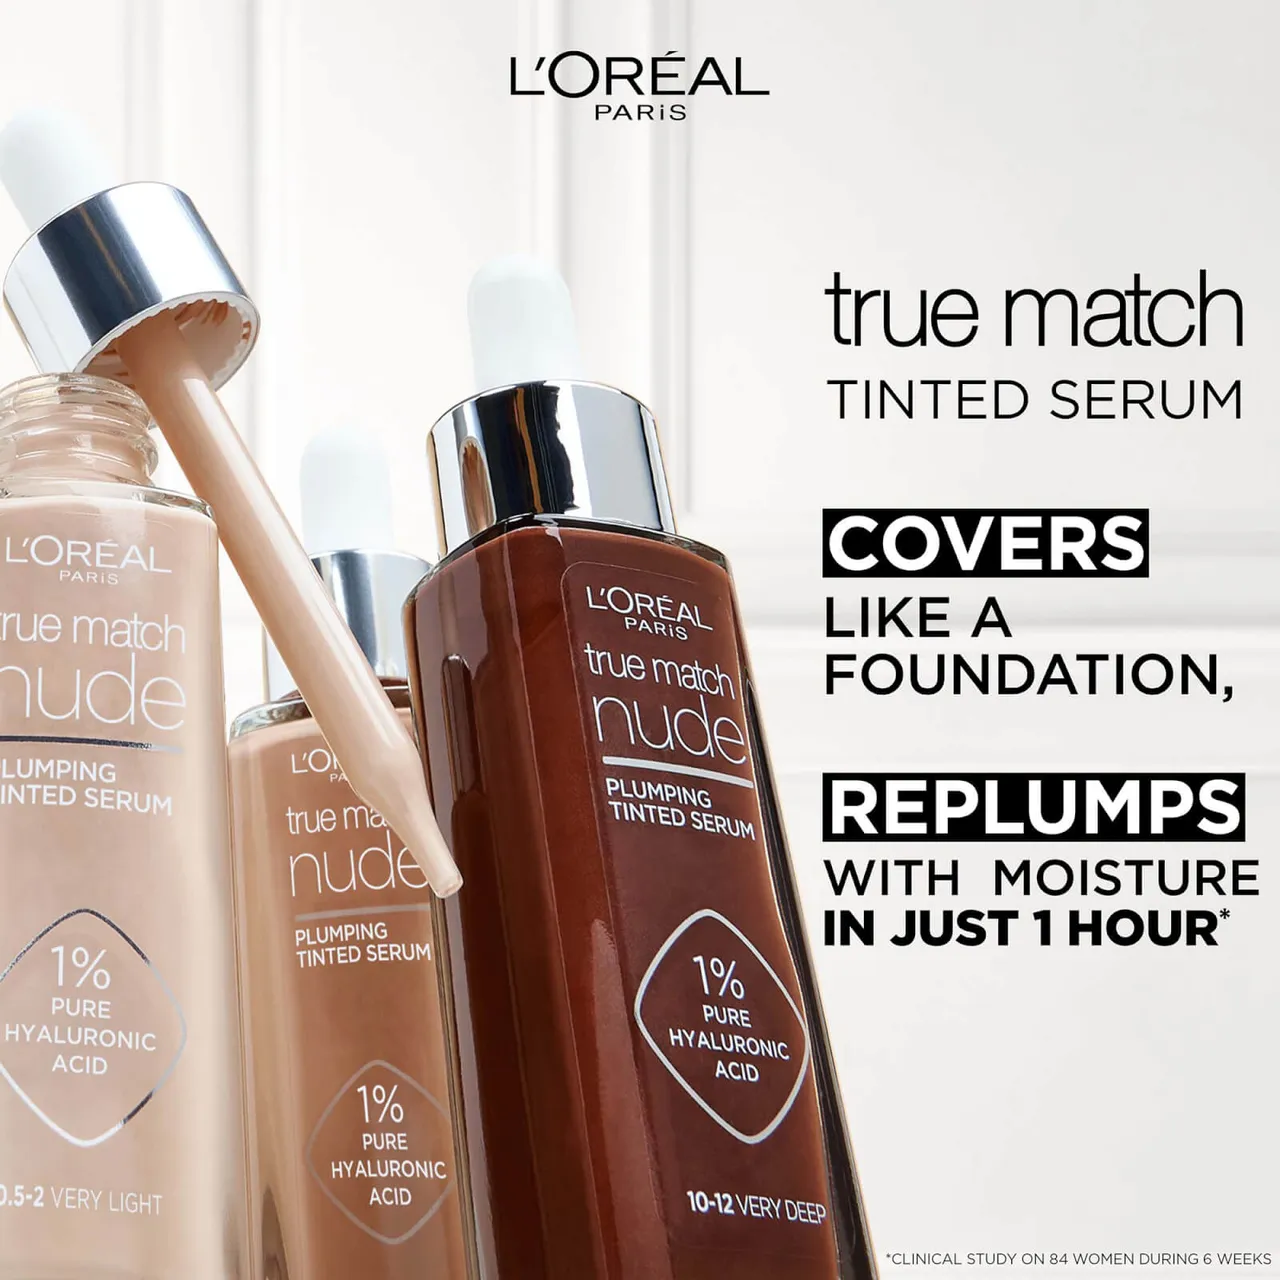 L'Oréal Paris True Match Nude Plumping Tinted Serum (Various Shades) - 4-5 Medium